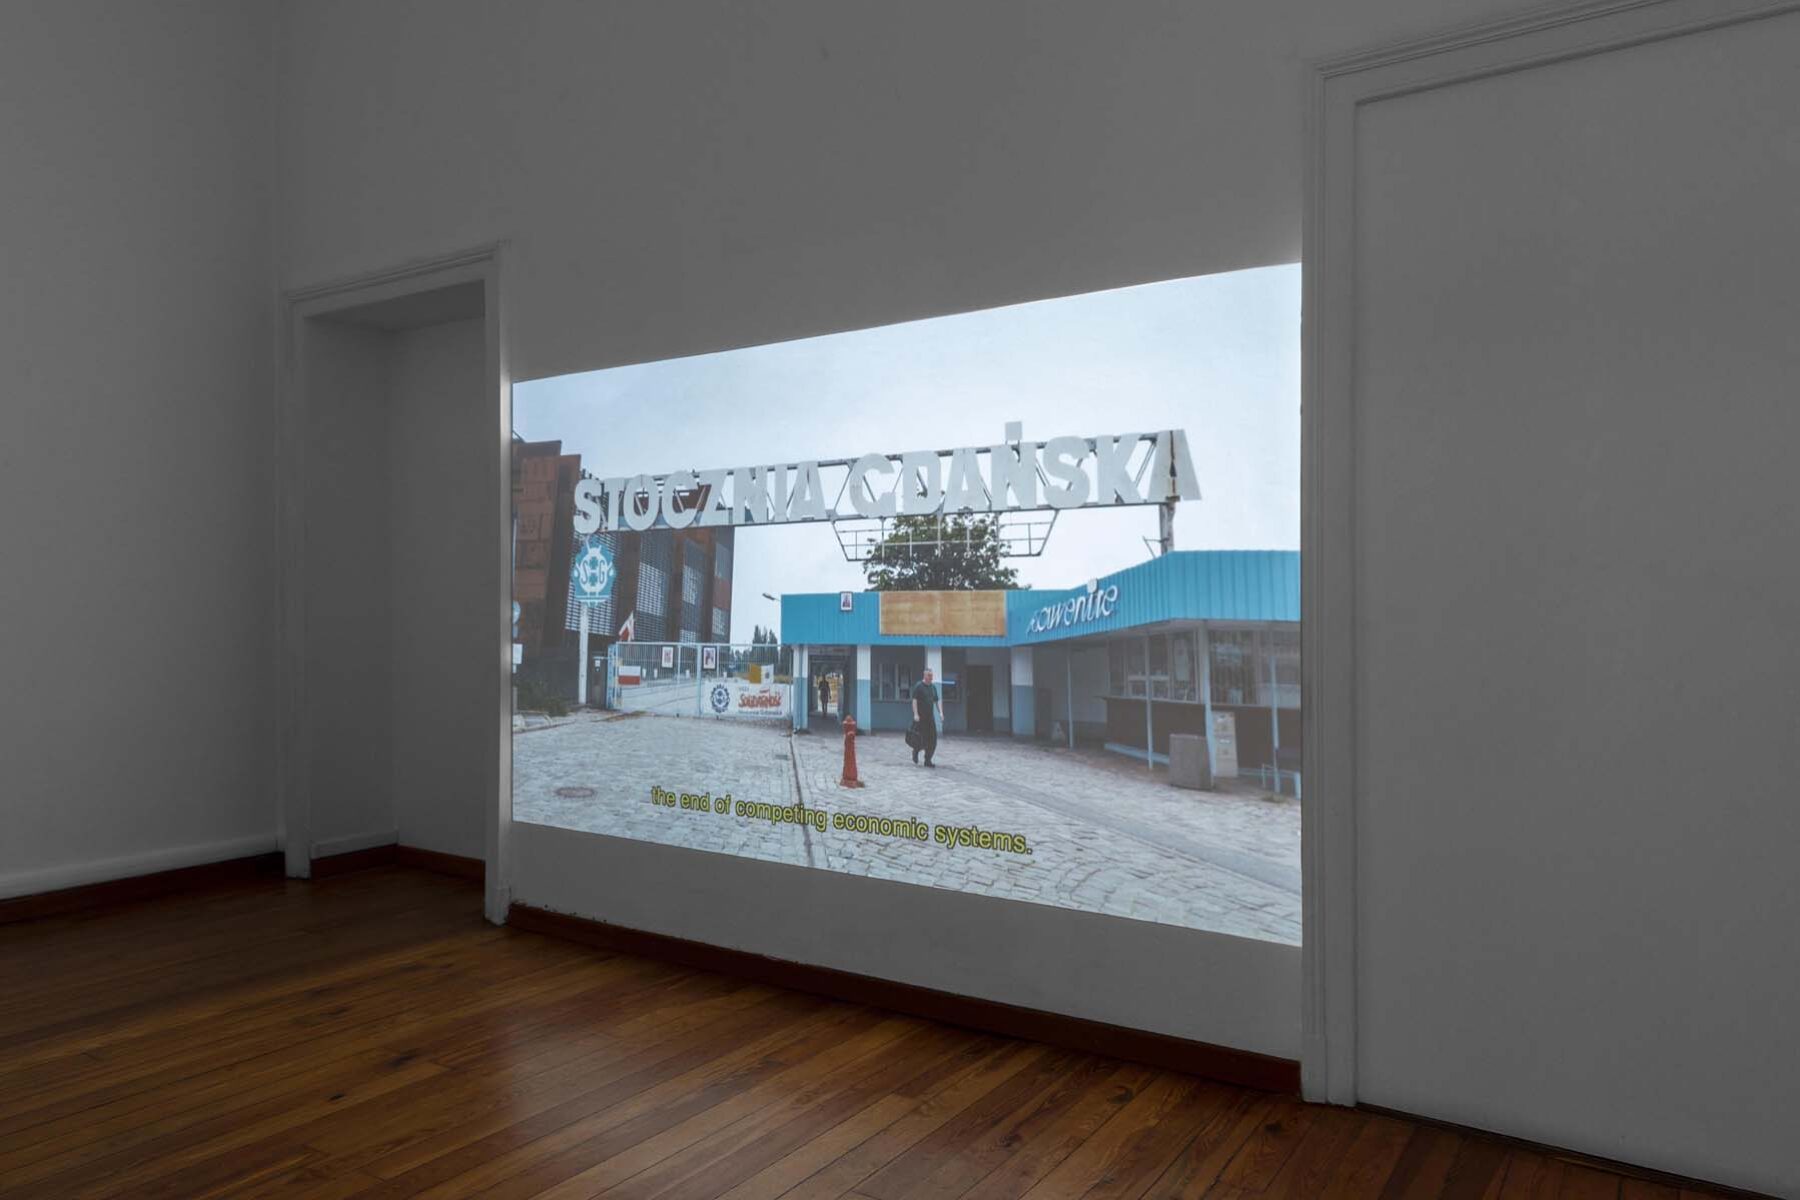 Filip Markiewicz, Road to Nowhere, installation view, C+N Canepaneri, Milano, ph. Mattia Mognetti